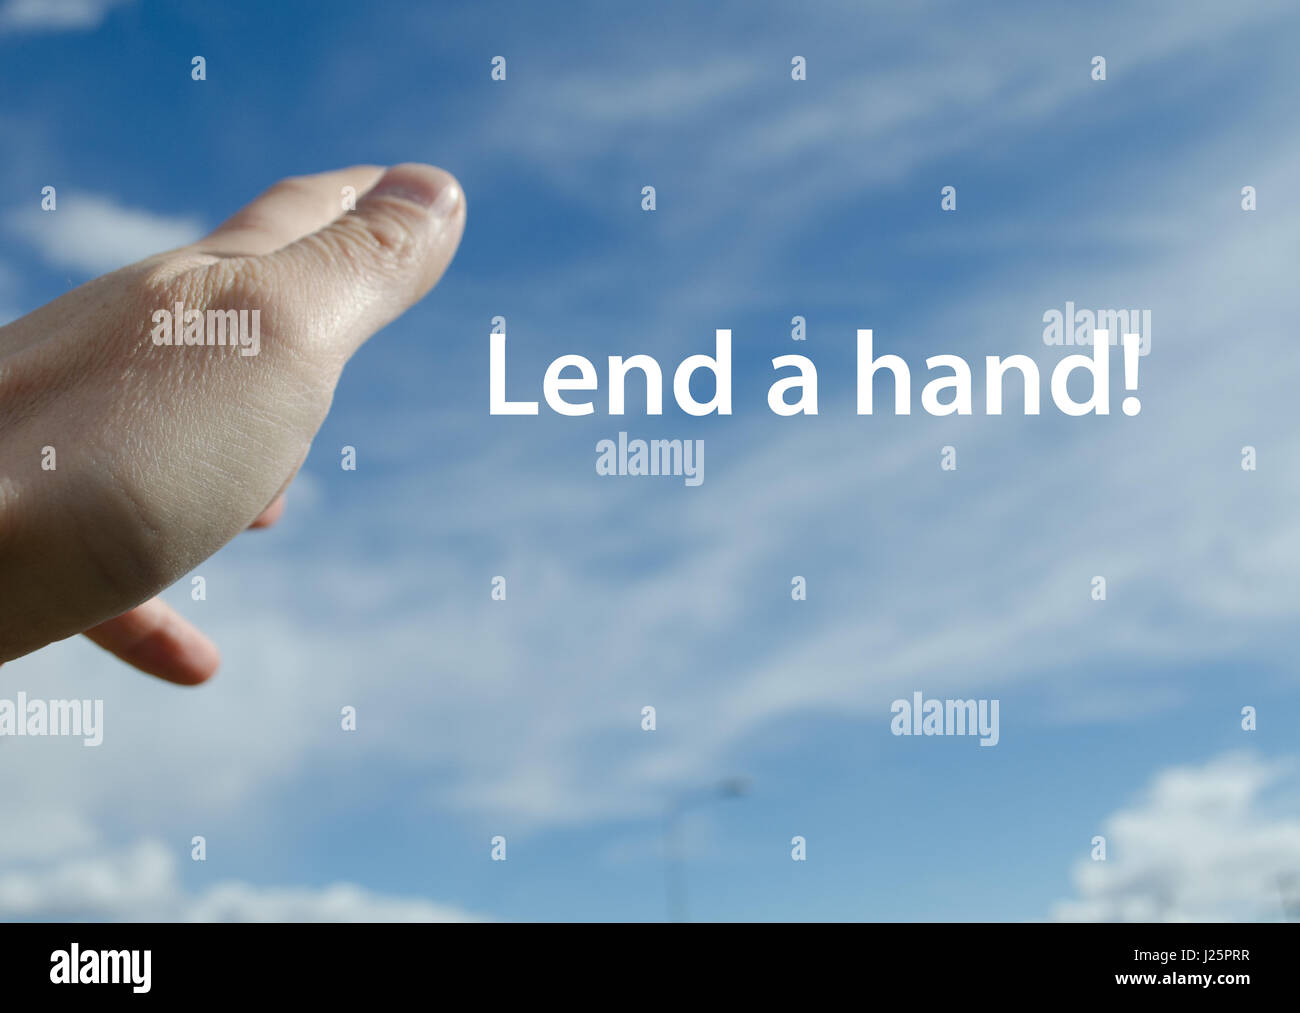 Lend a hand concept Stock Photo